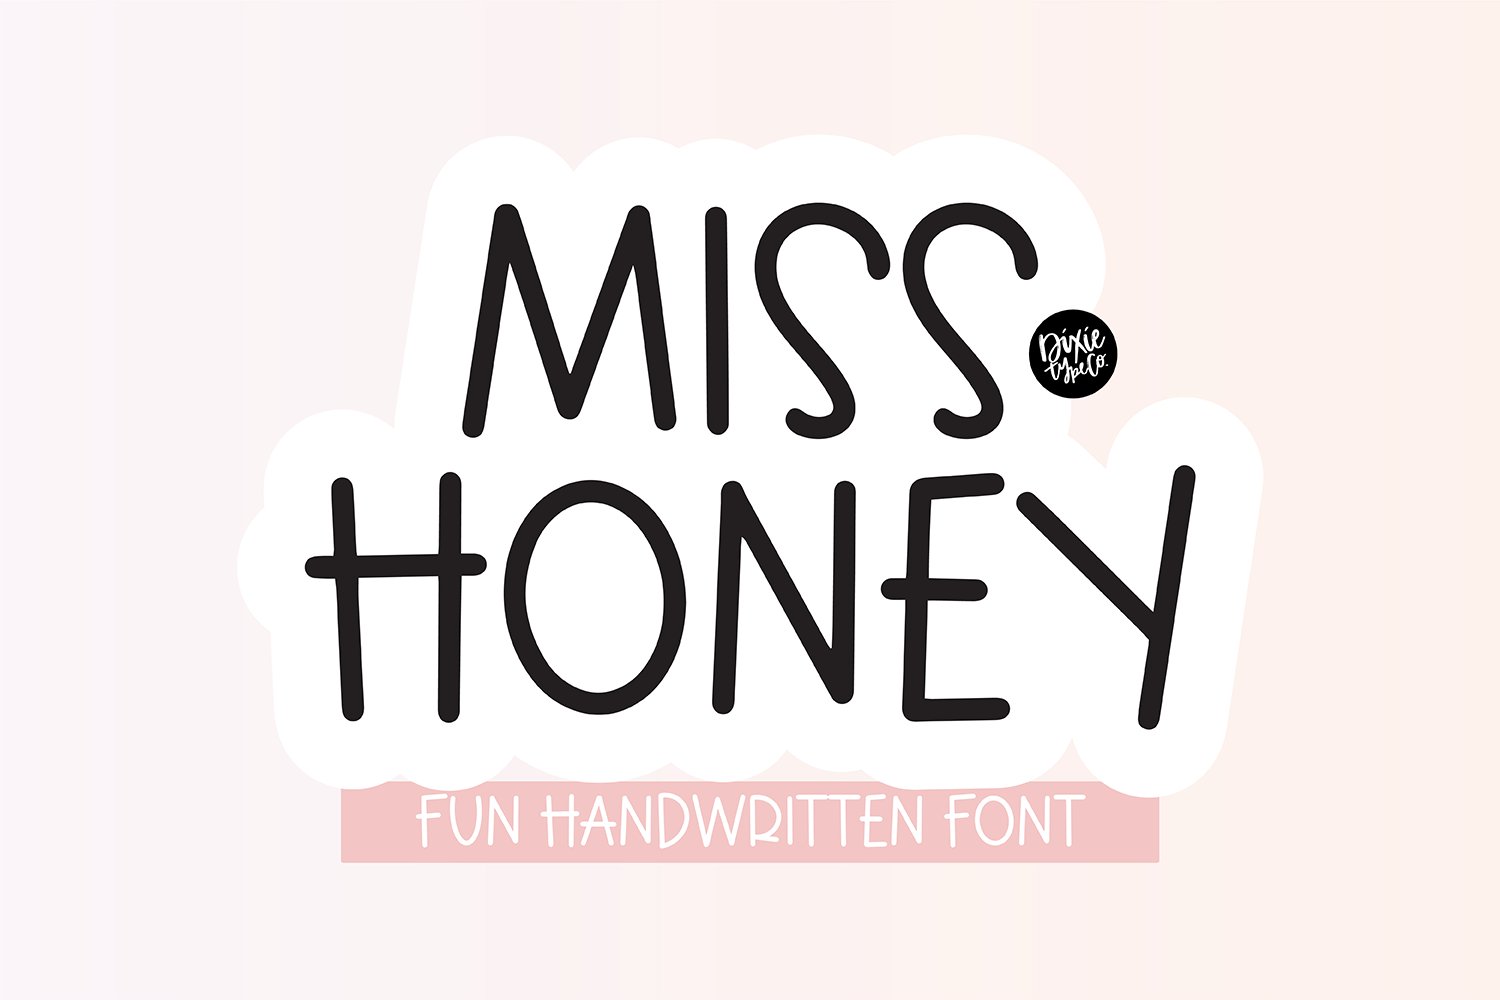 MISS HONEY Kids Handwriting Font cover image.